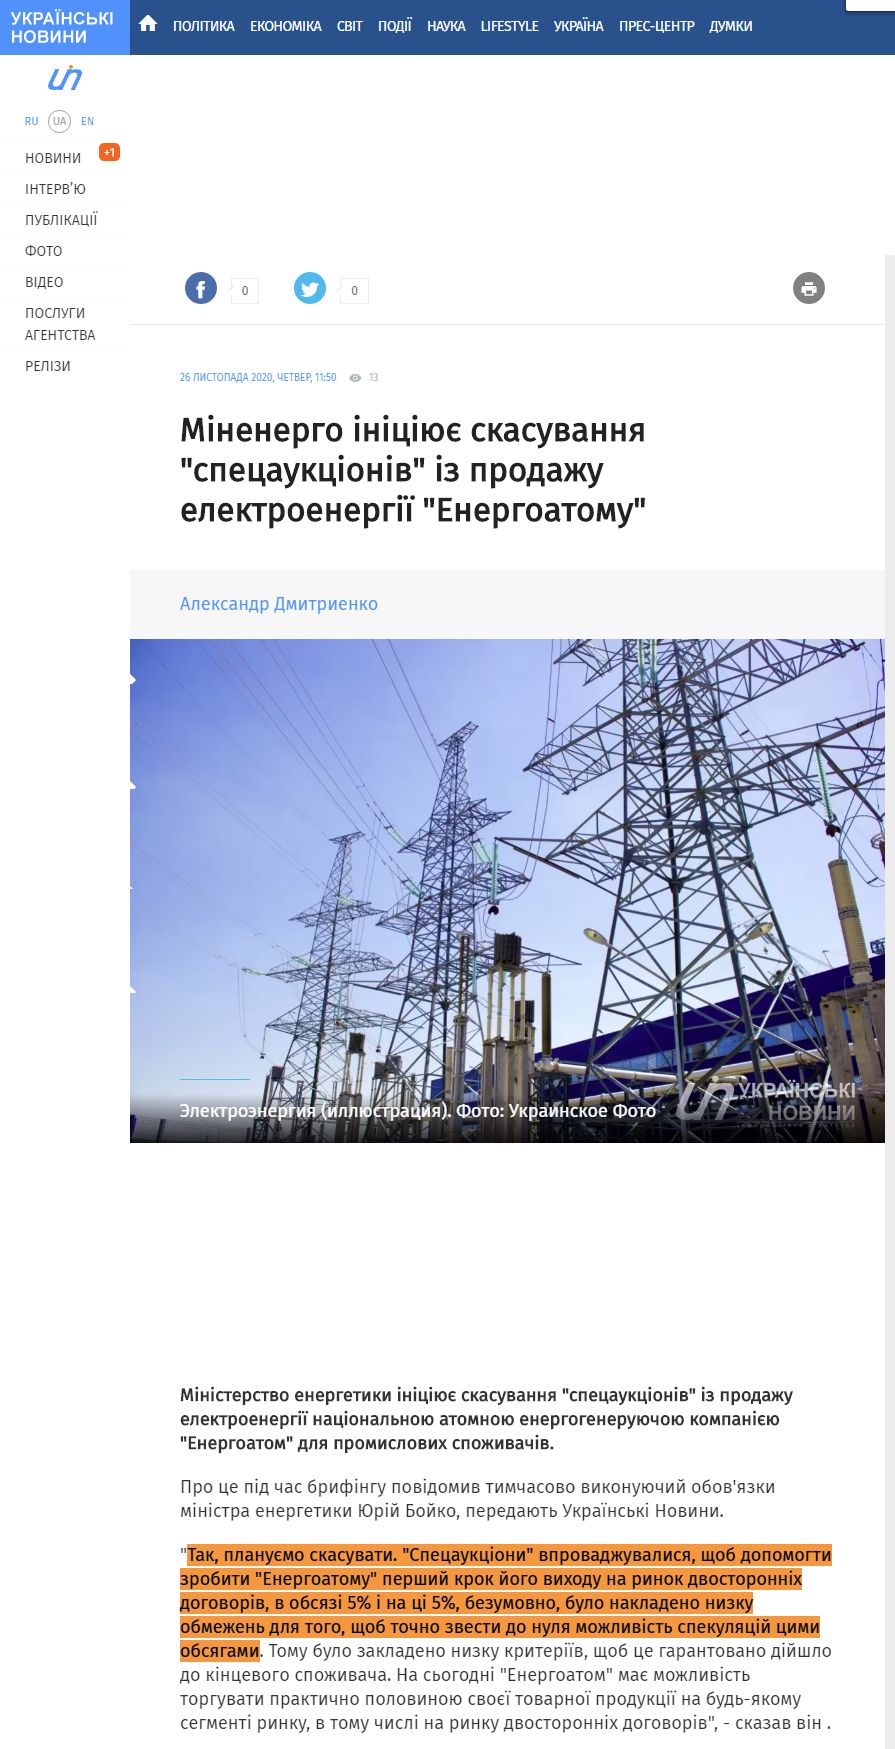 https://ukranews.com/ua/news/740936-minenergo-initsiyuye-skasuvannya-spetsauktsioniv-iz-prodazhu-elektroenergiyi-energoatomu